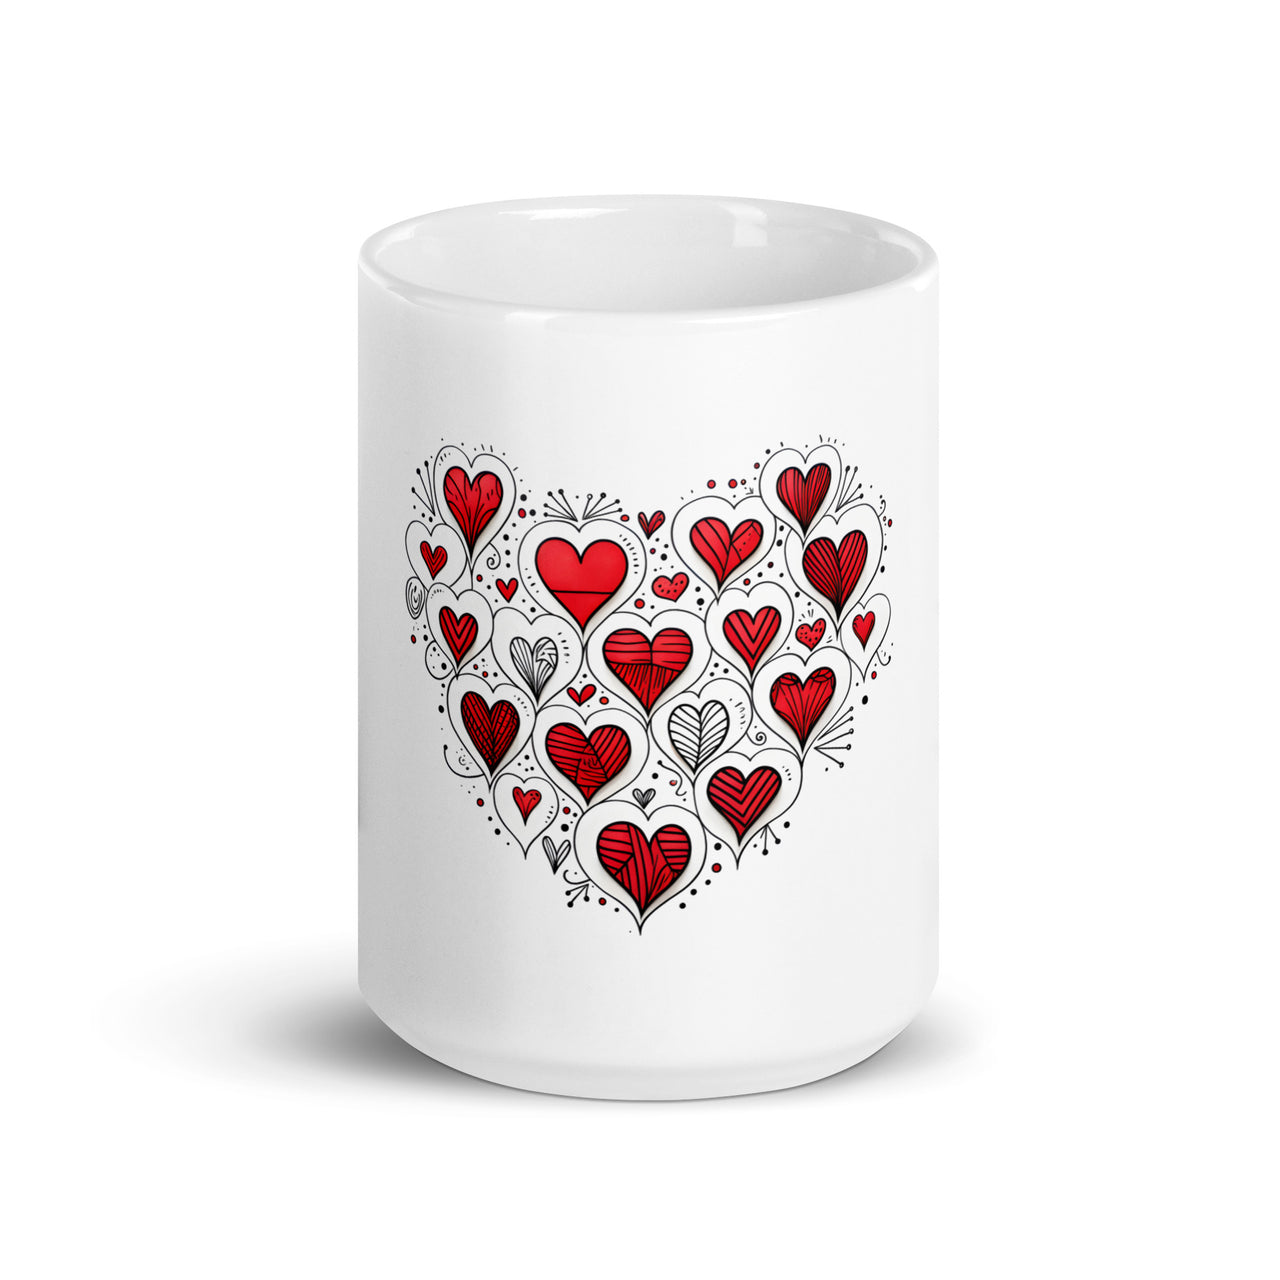 Hearts within Heart: Unfold Love White Mug